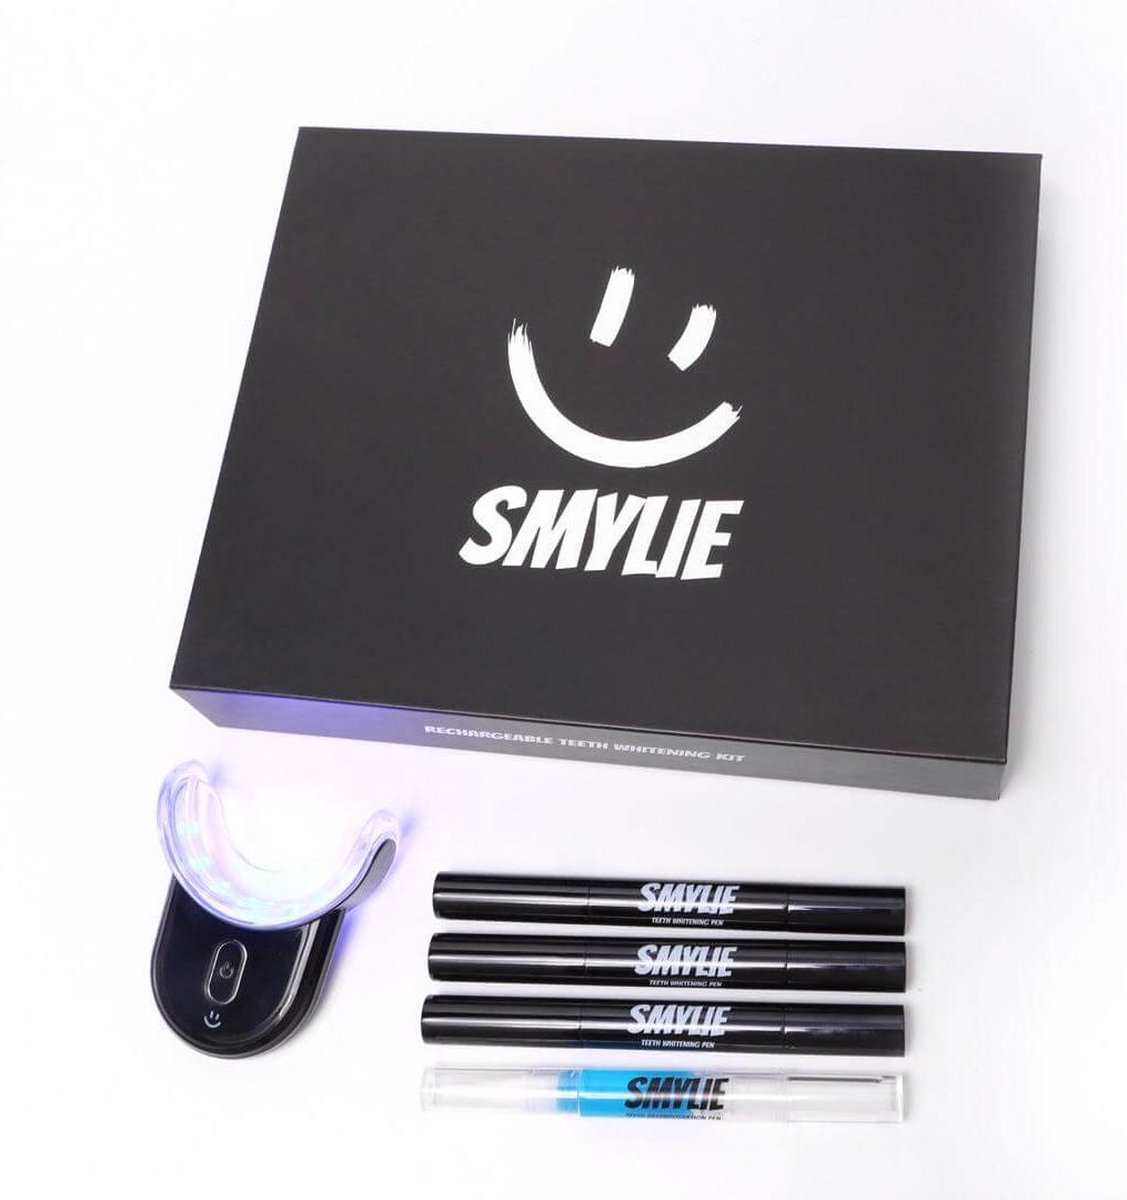 Smylie Teeth Whitening Kit